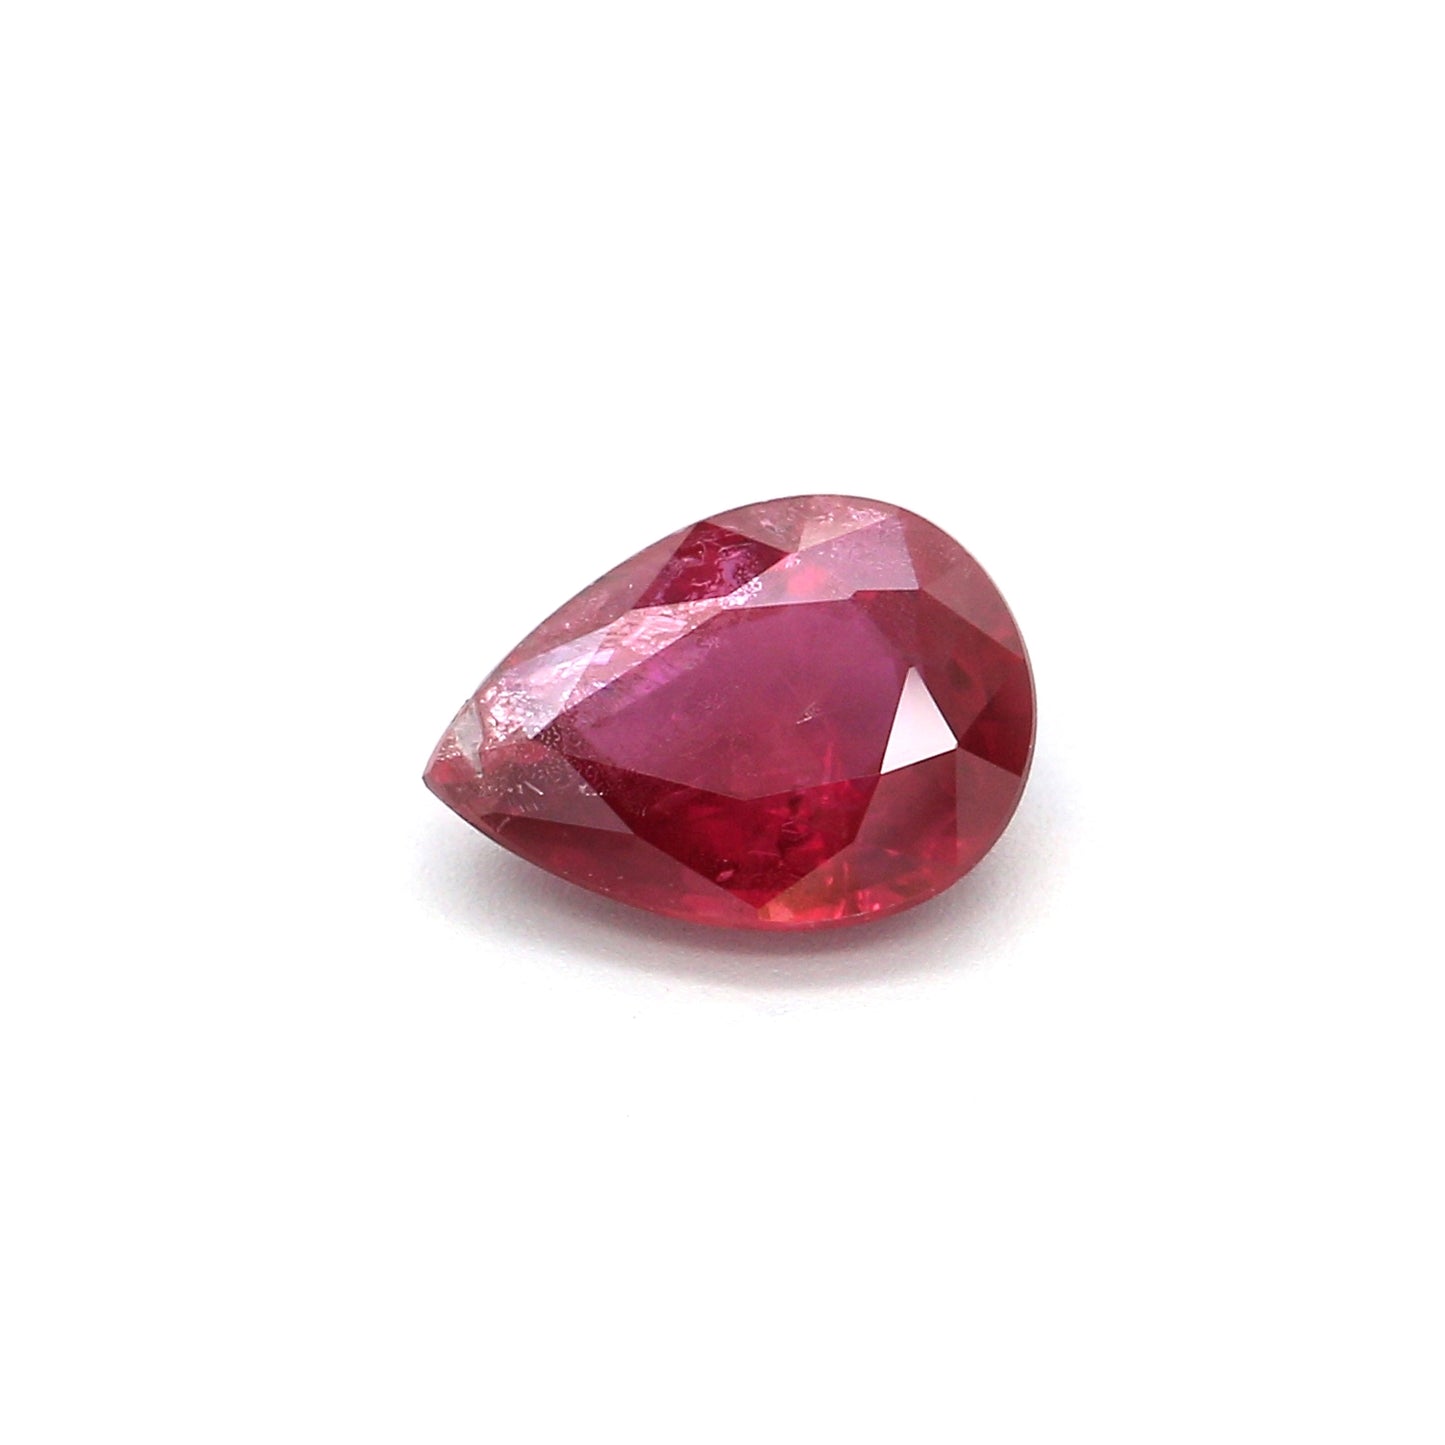 0.73ct Purplish Red, Pear Shape Ruby, H(b), Thailand - 6.78 x 4.88 x 2.67mm